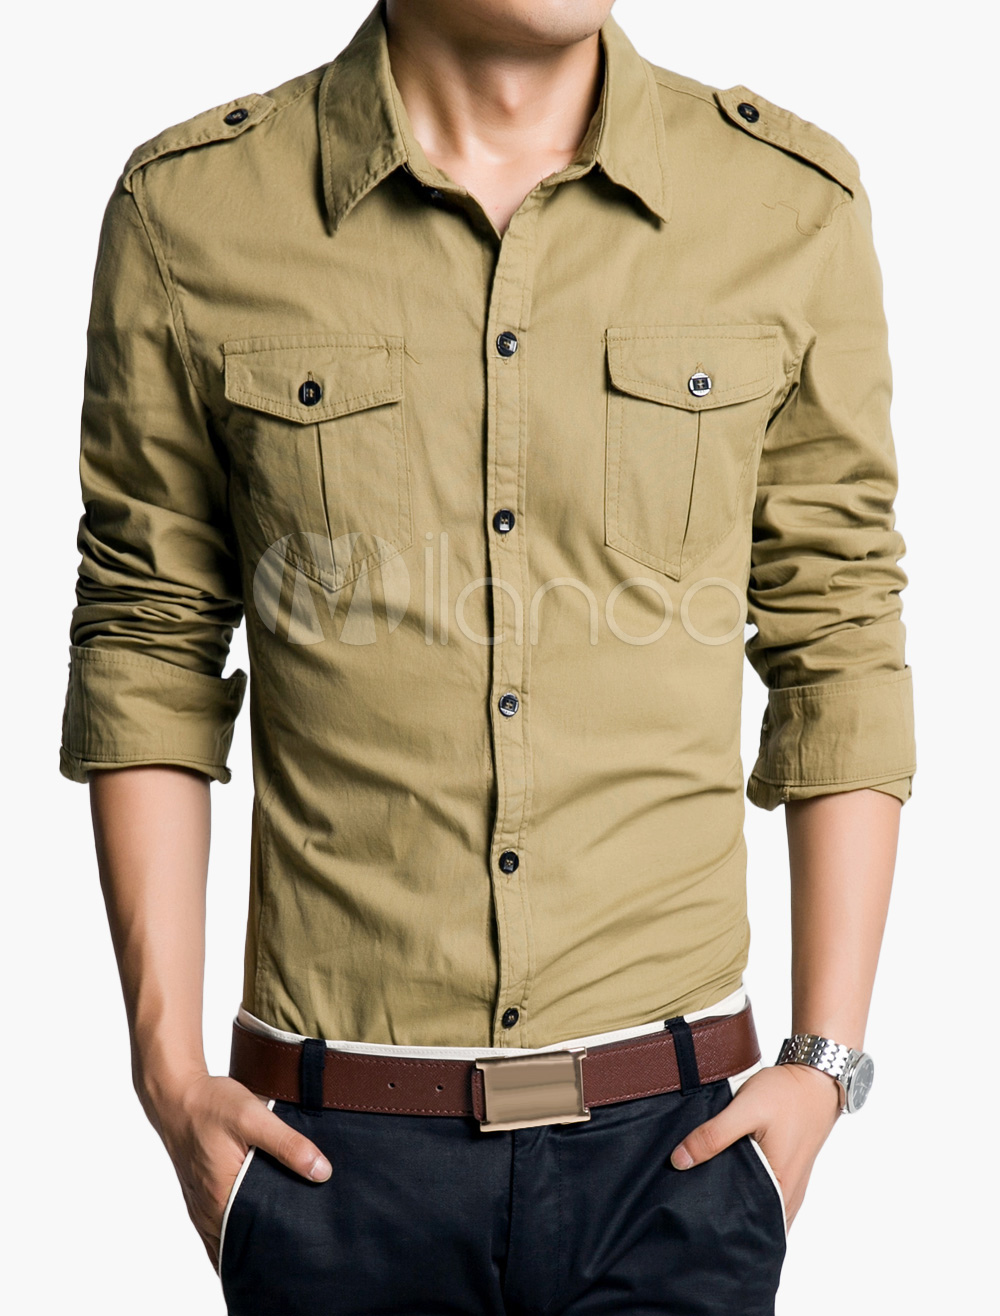 Button-up Long Sleeve Shirt with Pockets - Milanoo.com